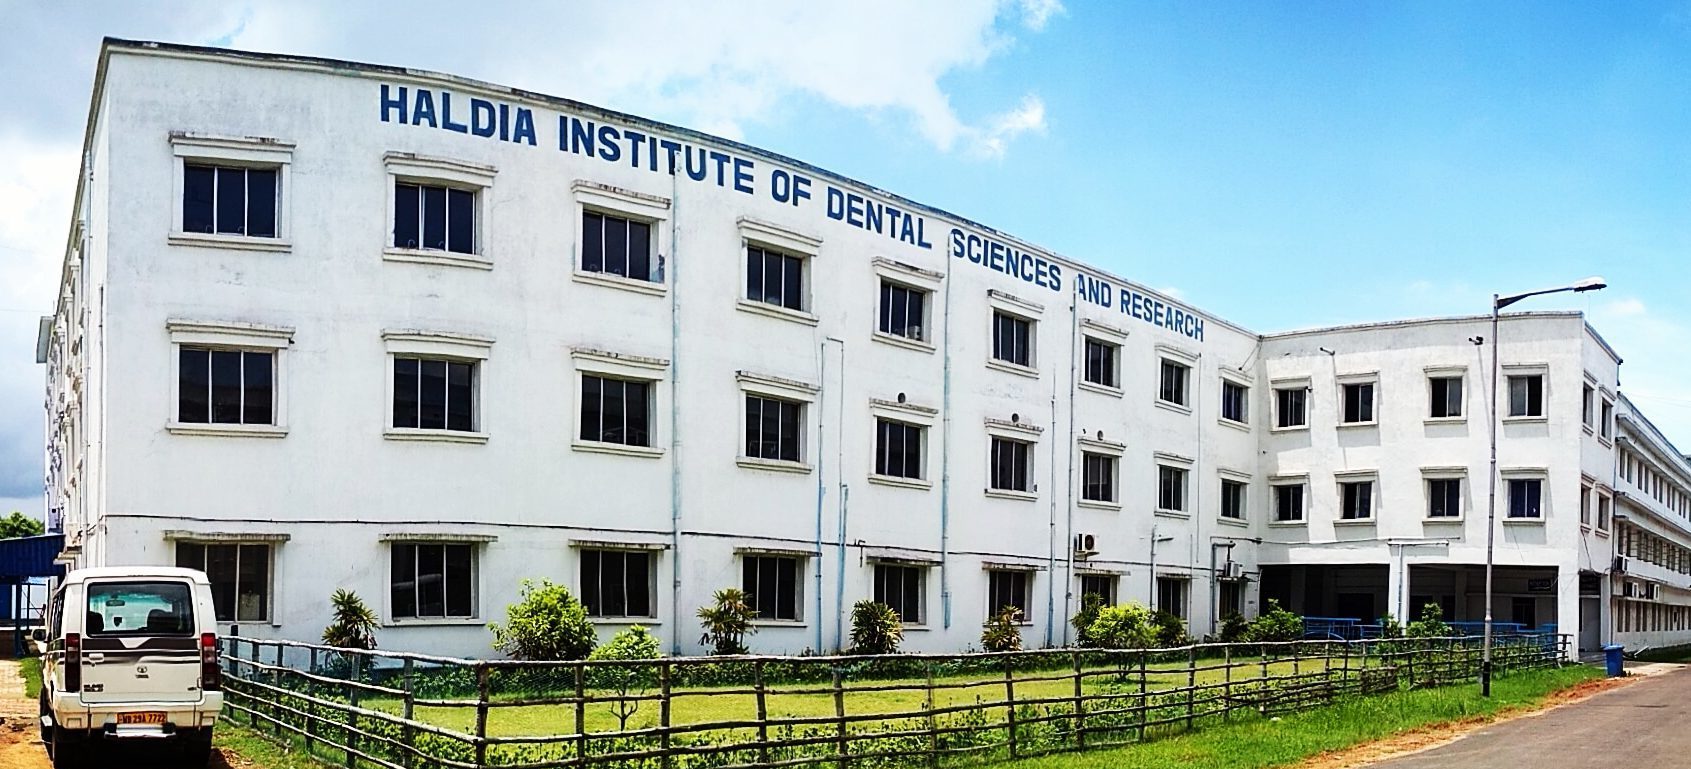 Haldia Institute of Dental Sciences Bansbishnupur Fees, Ranking, Eligibility, Reviews